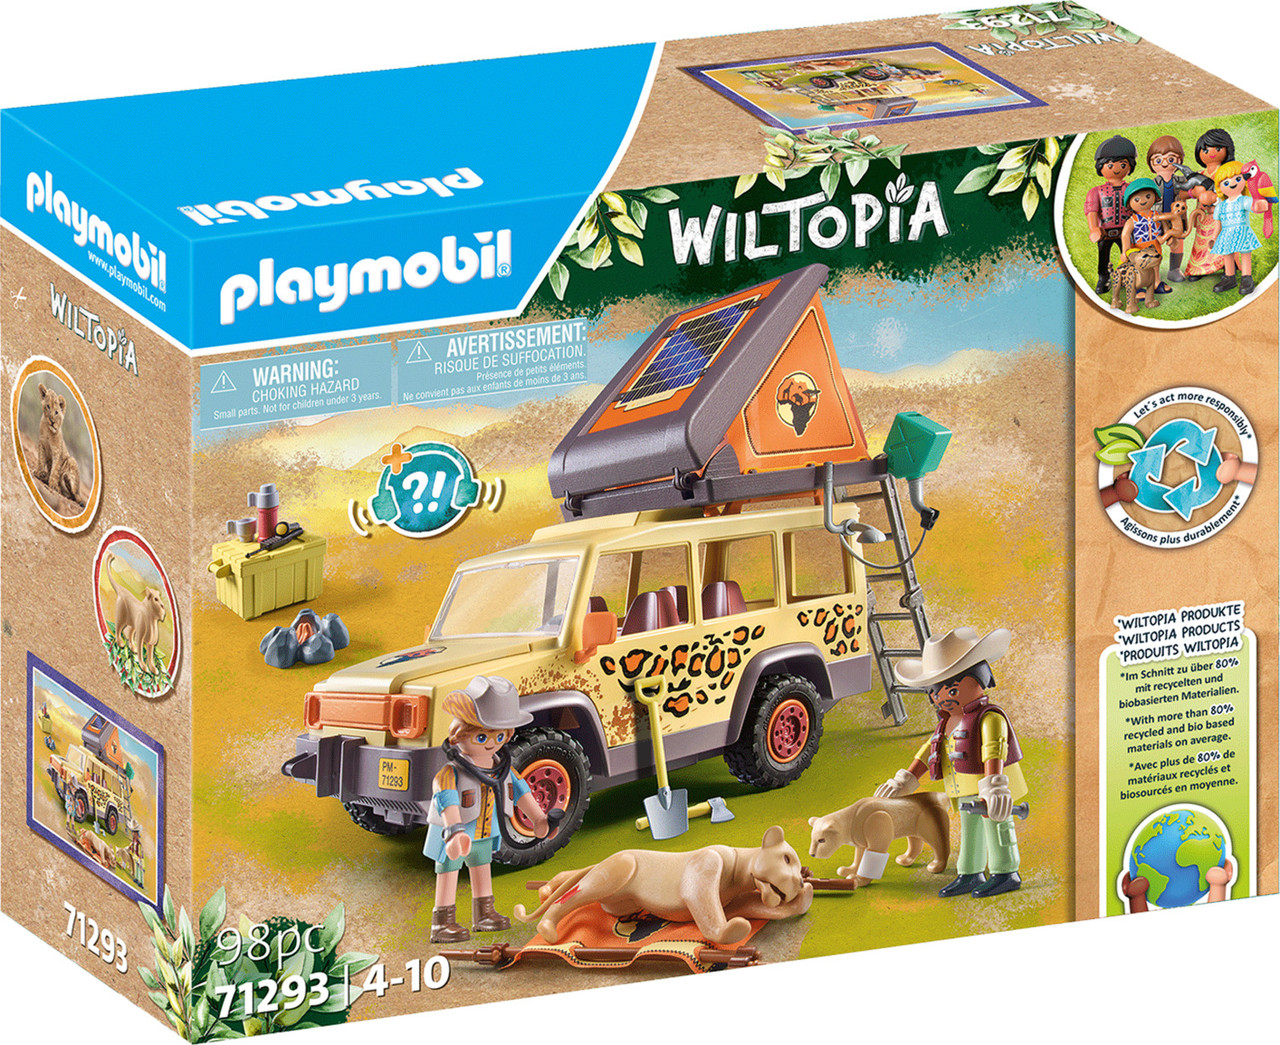 Playmobil Wiltopia - Animal Photographer With Zebras - The Fun Company